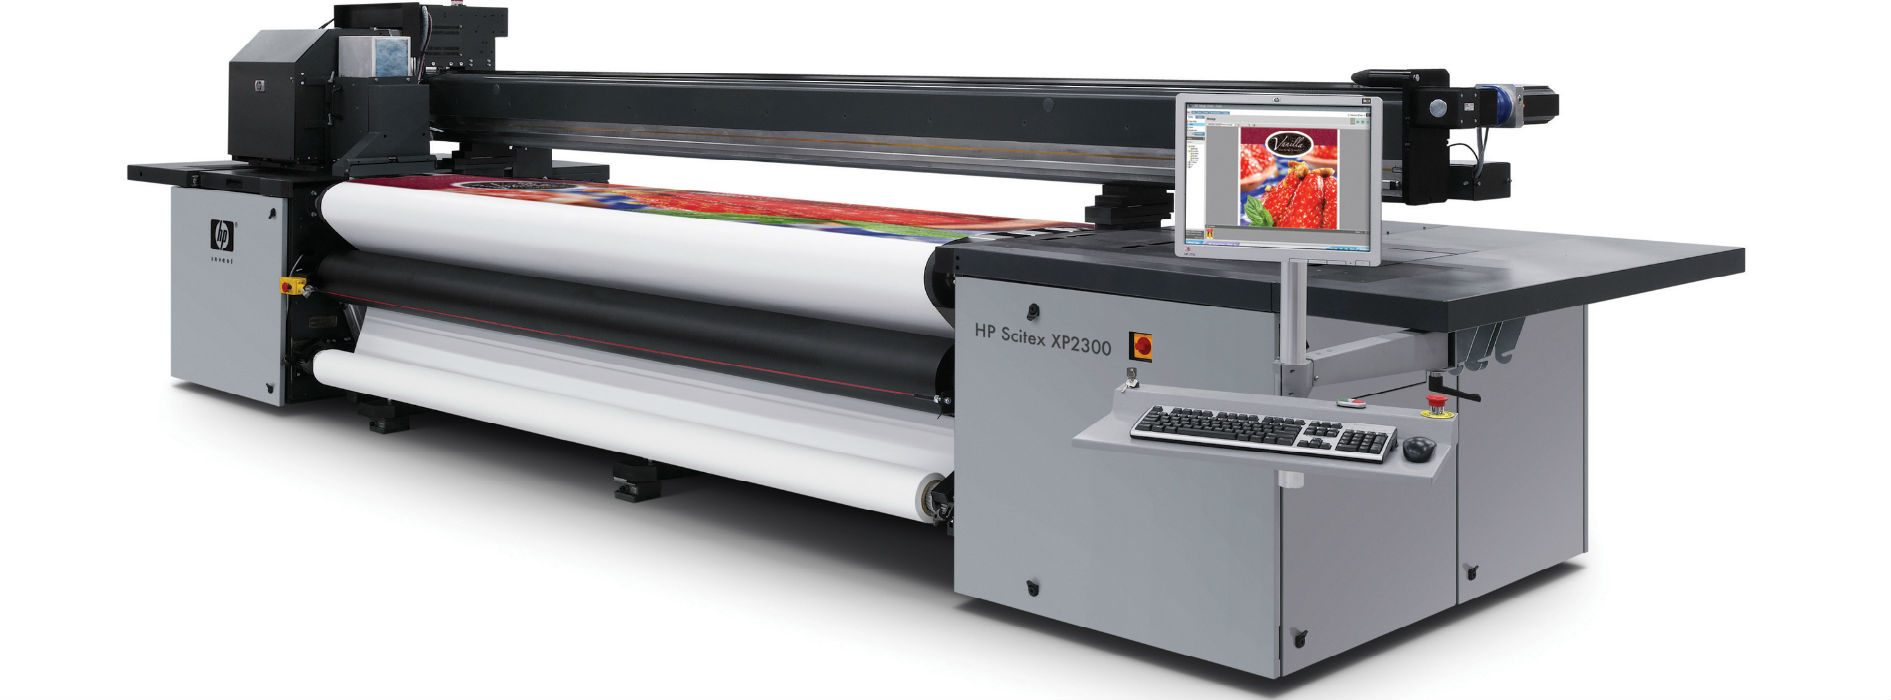 selcon enterprises printing and graphics